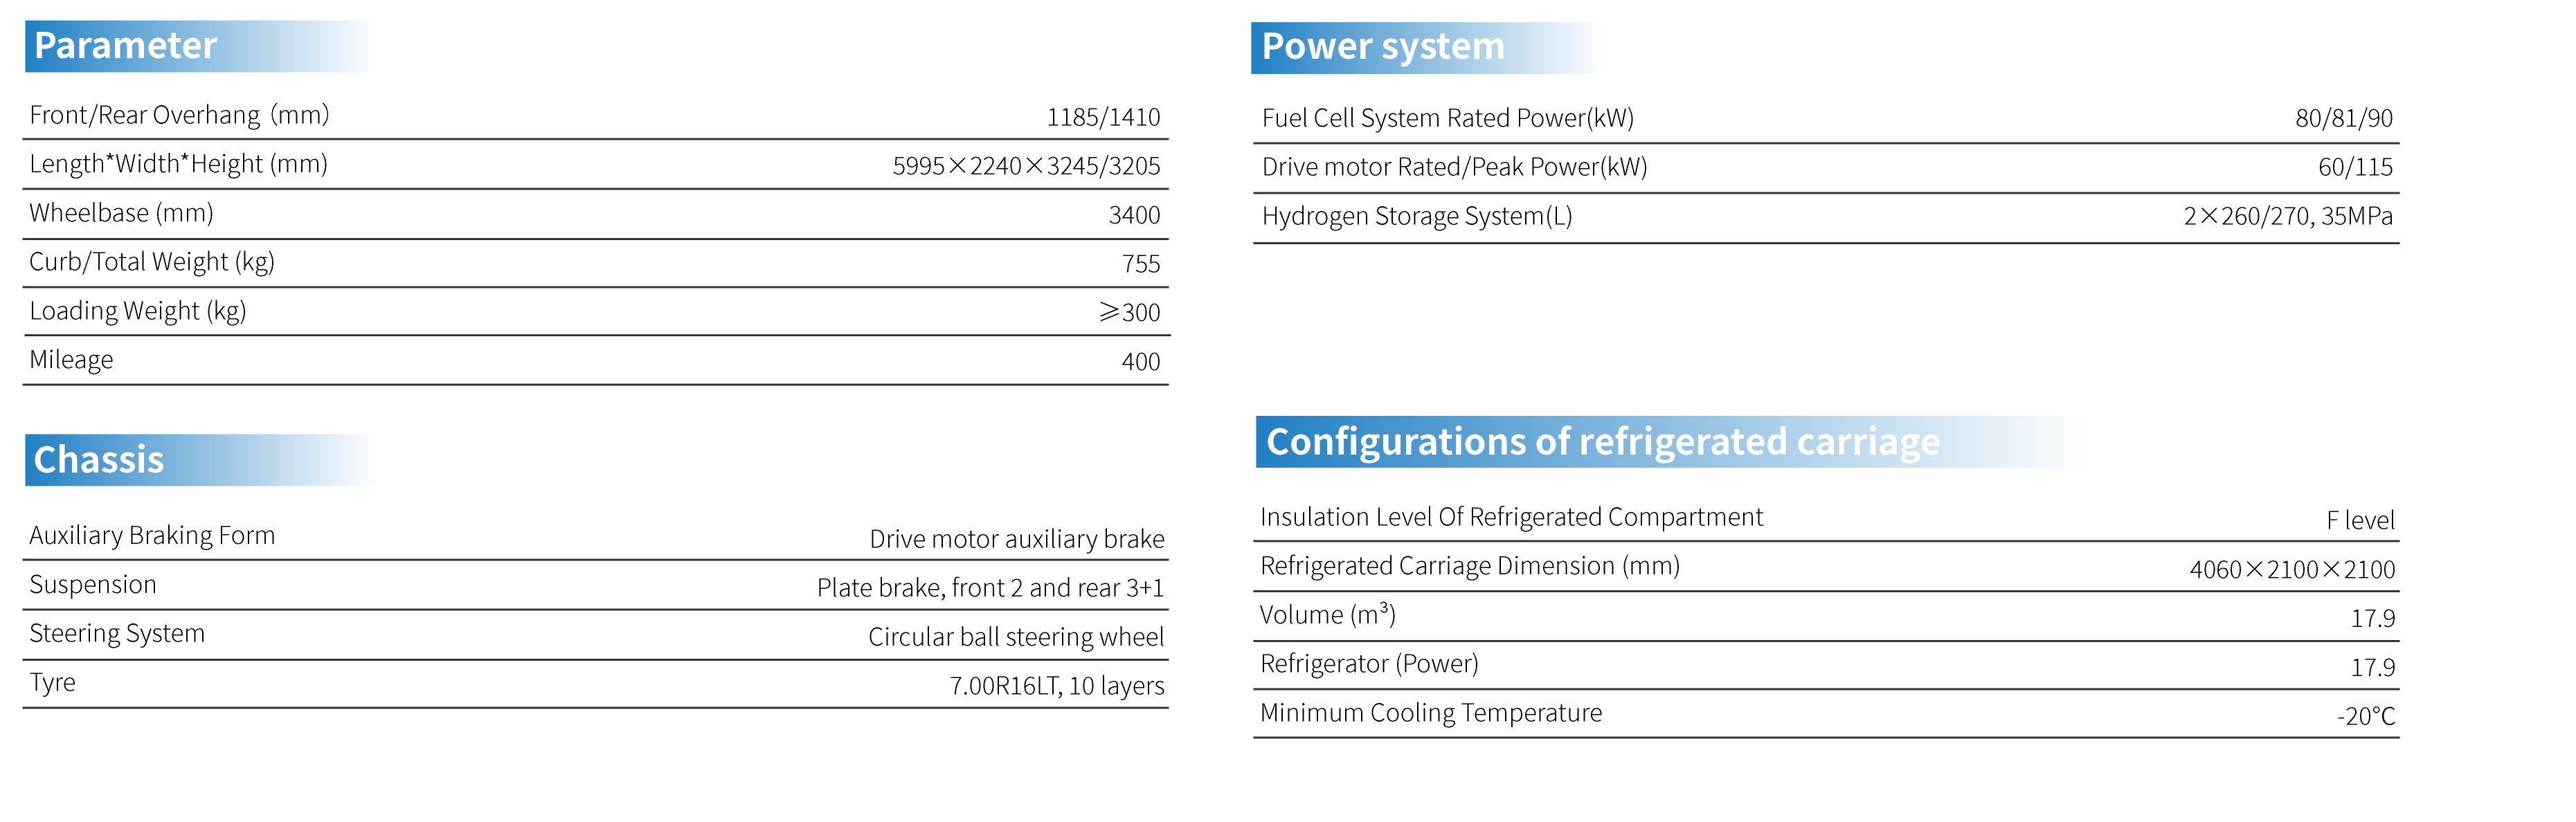 4.5T燃料电池冷藏车-配置参数.png